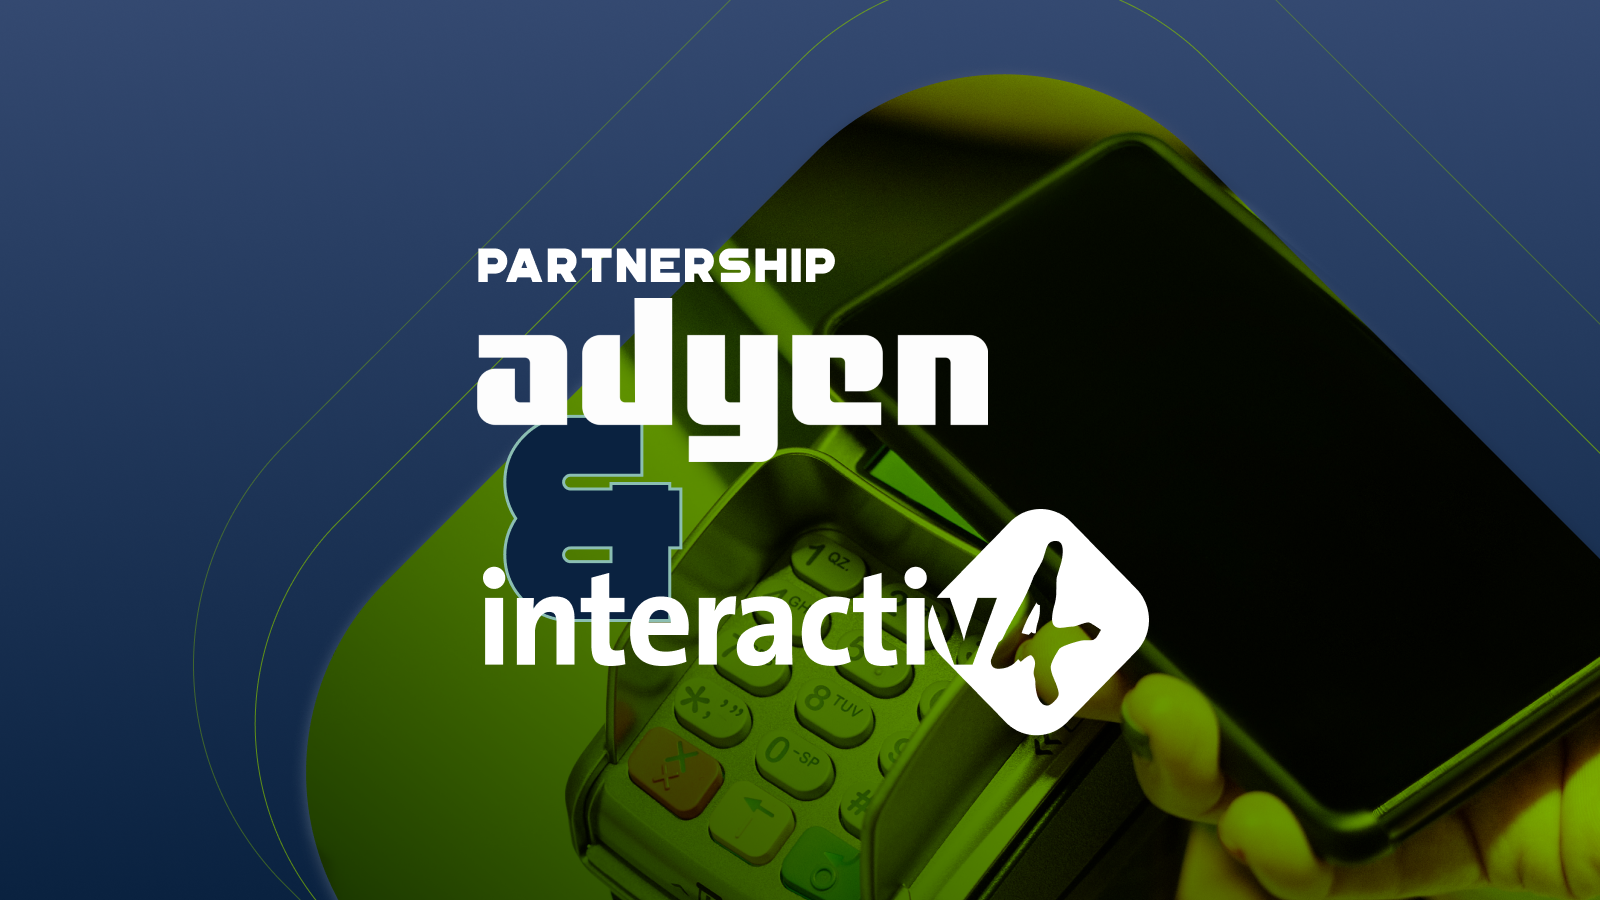 Interactiv4 teams up with Adyen | i4